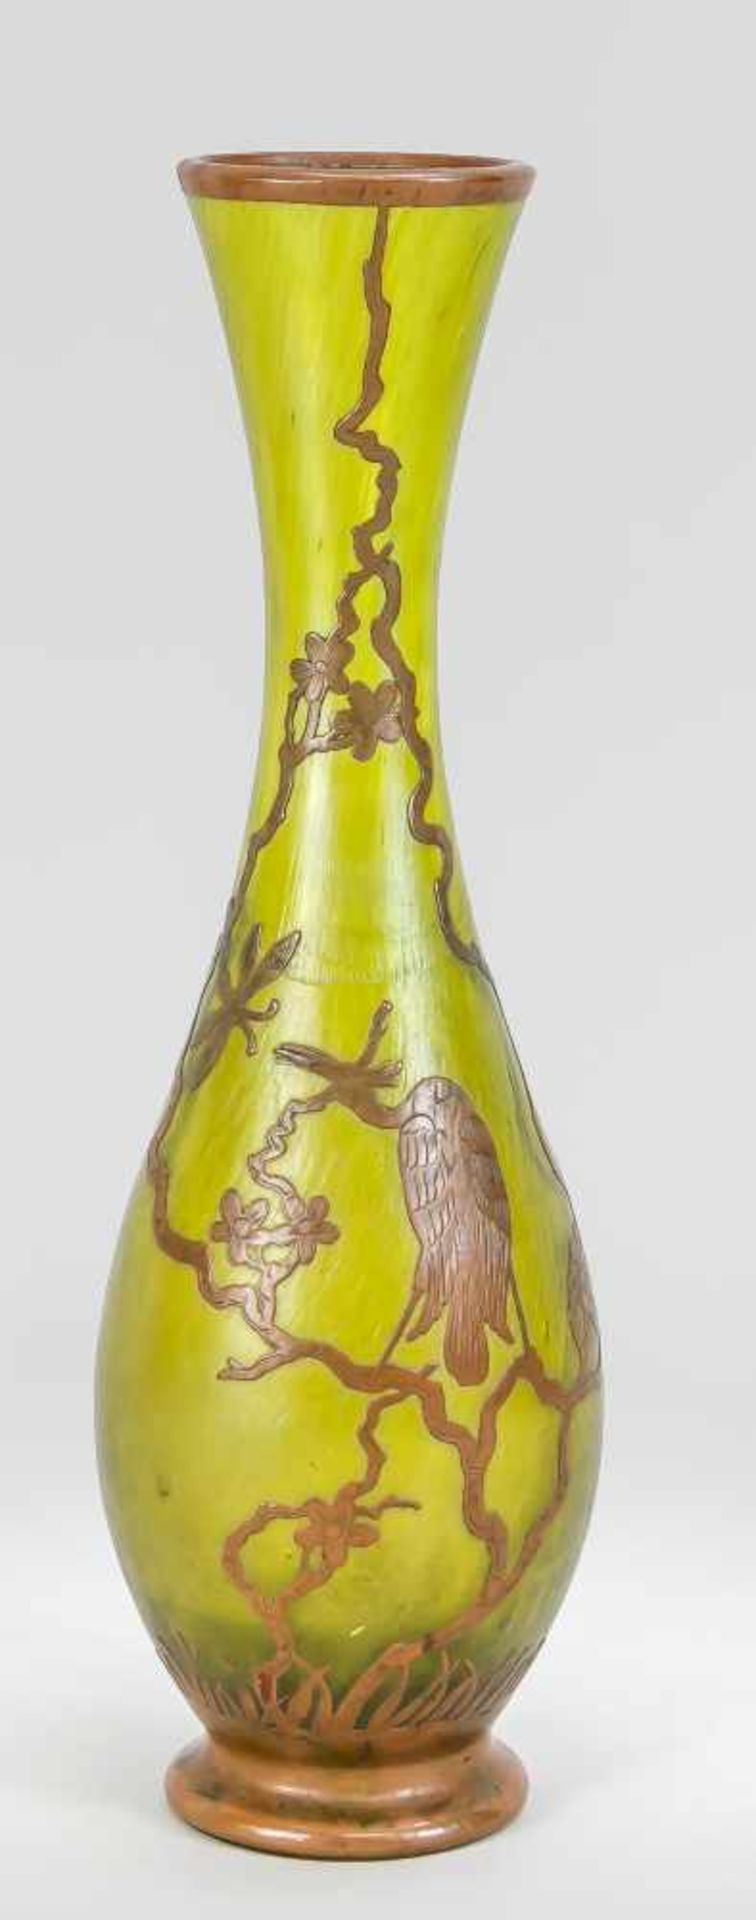 Jugendstil-Vase, Frankreich (?), um 1900, runder Stand, bauchiger geschweifter Korpus,klares Glas